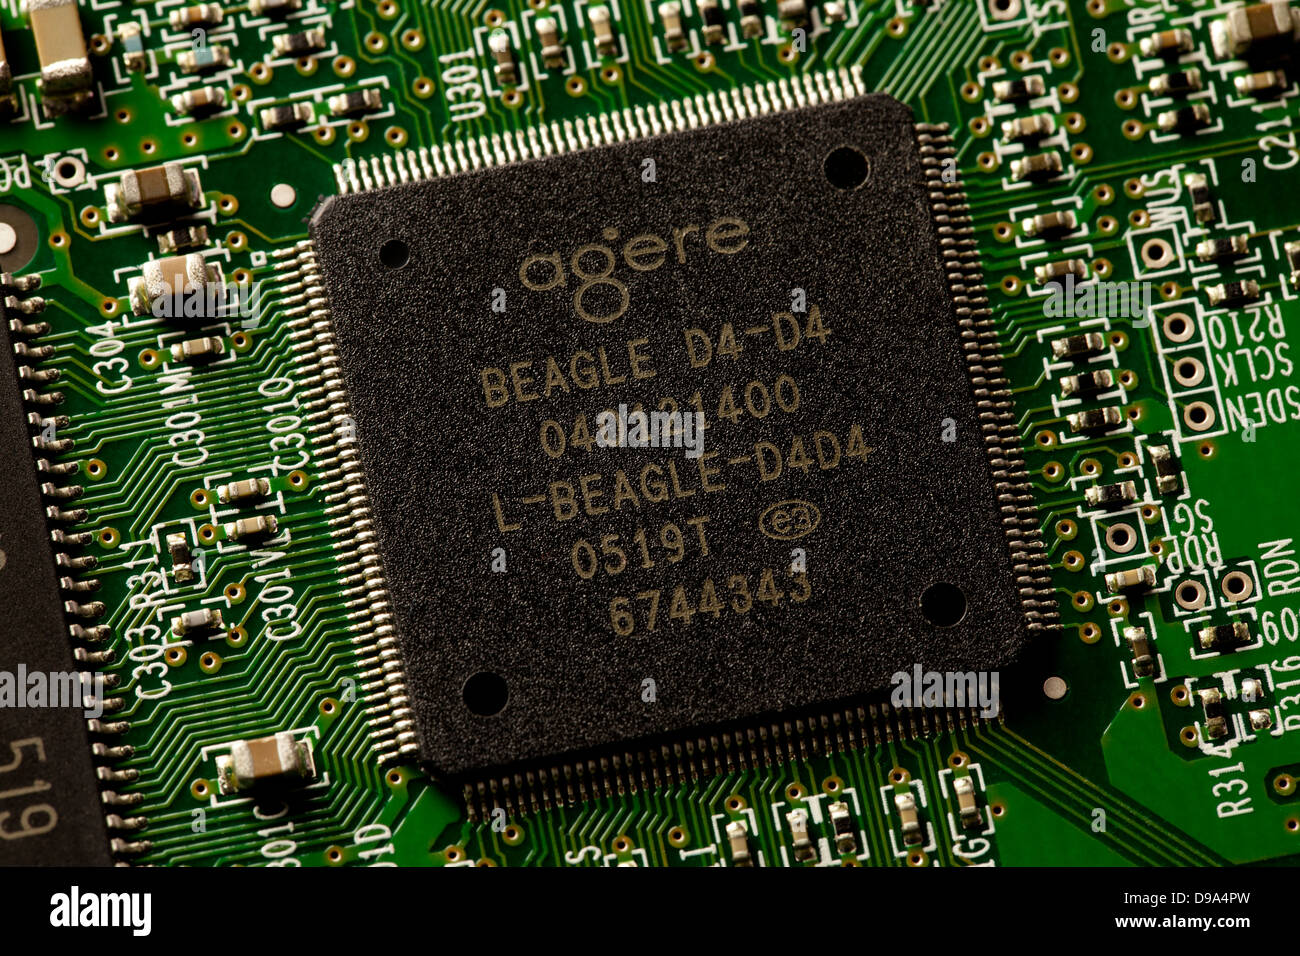 AGERE L-BEAGLE-D4D4-DB 19 bit CPU on circuit board Stock Photo